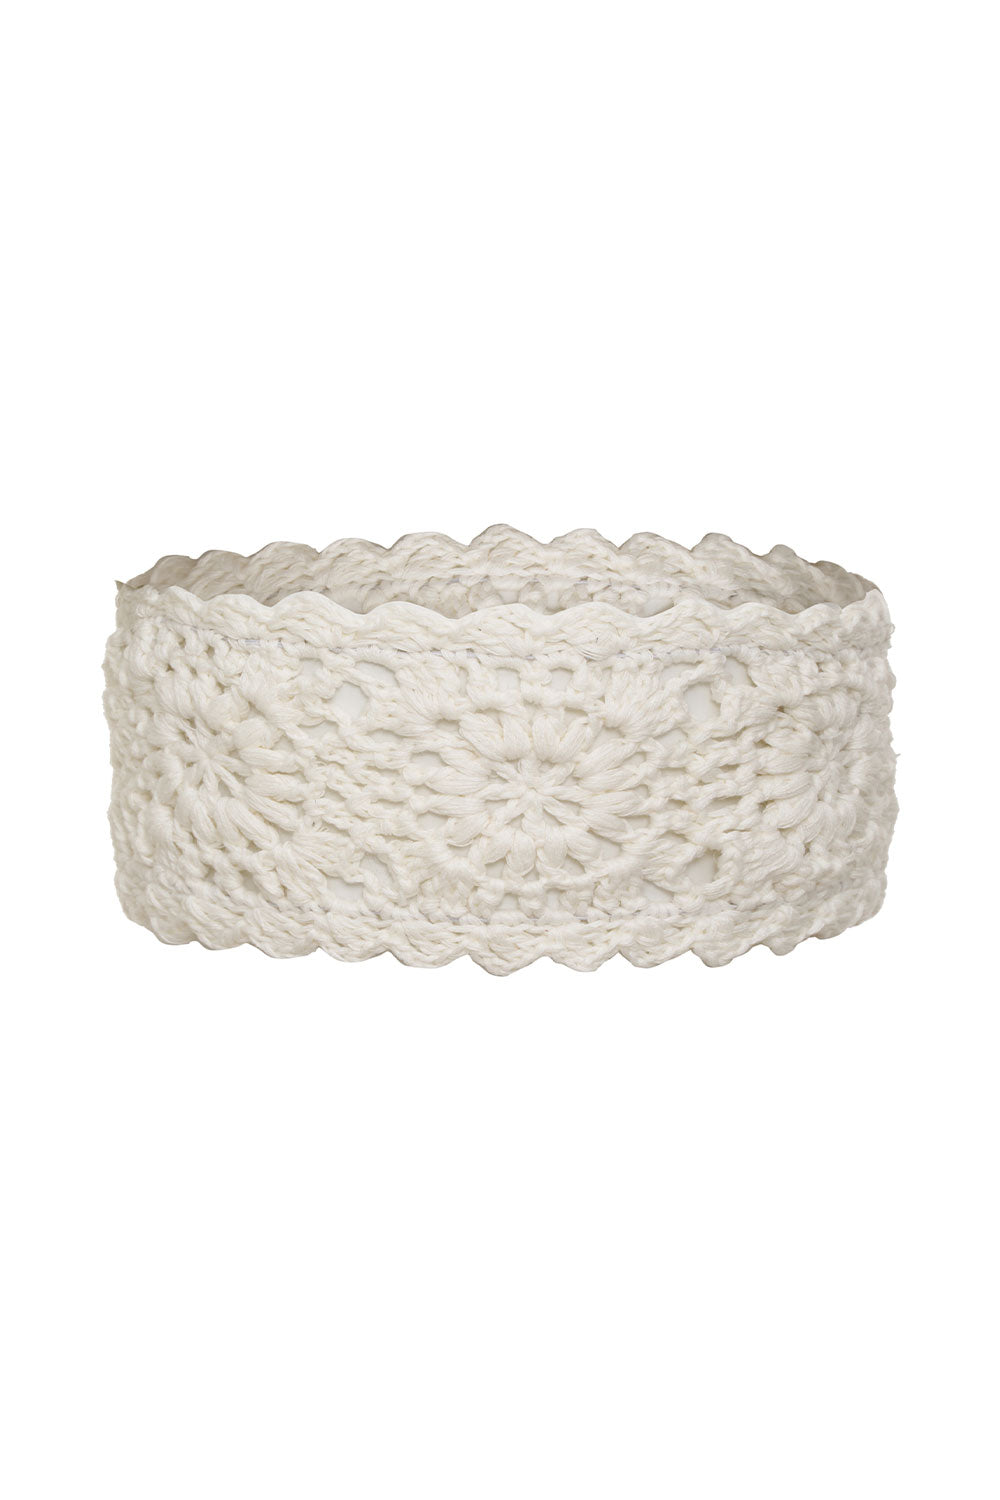 Amore Crochet Headband - White